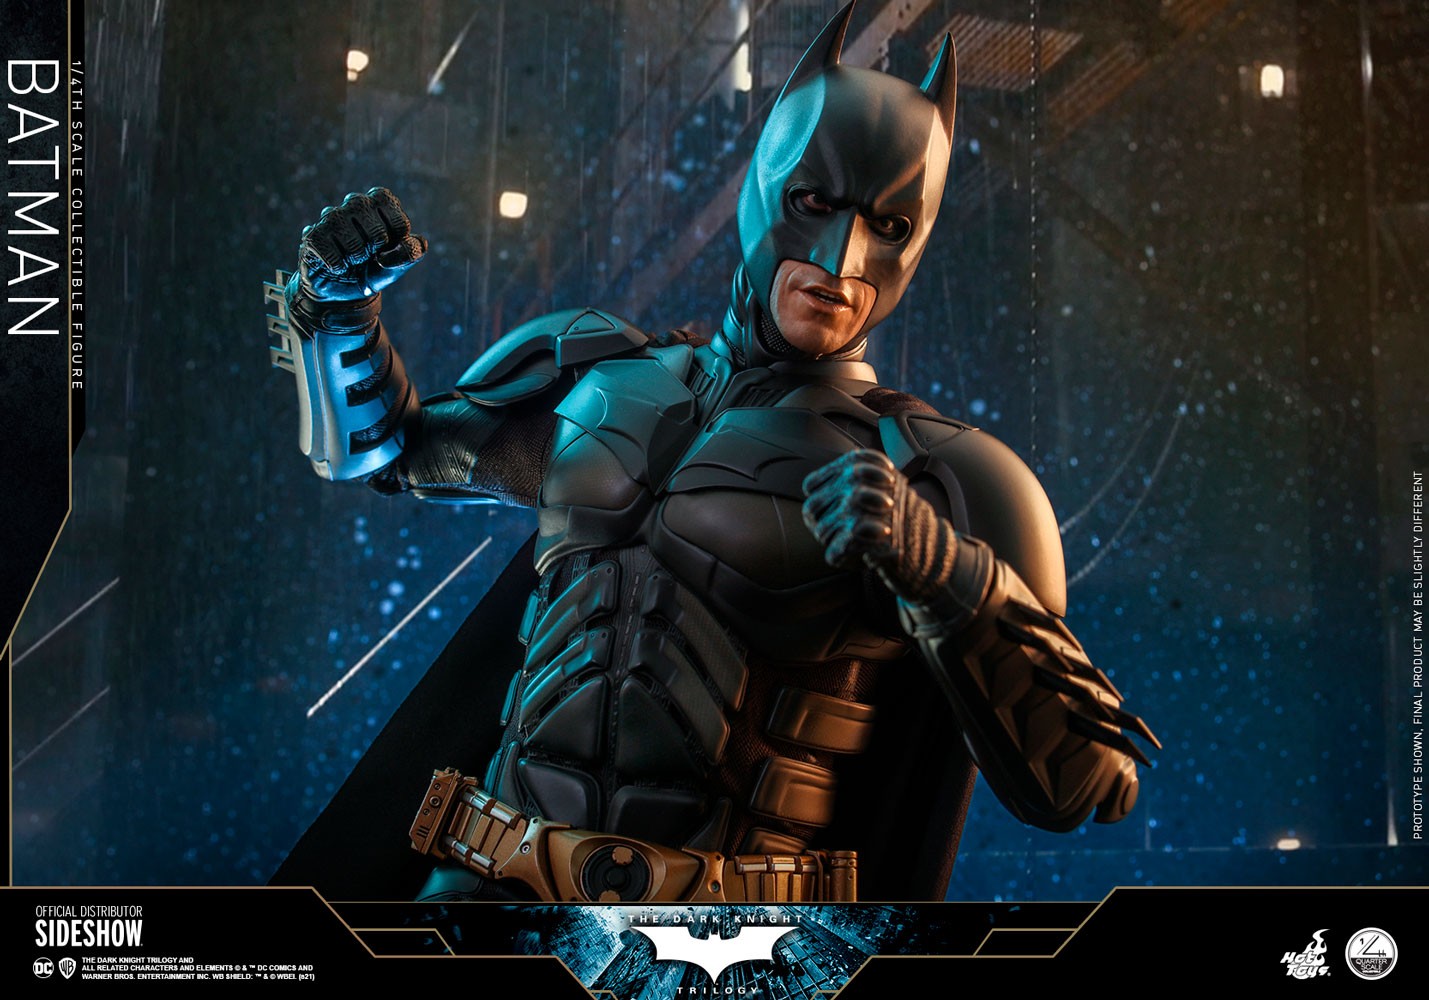 Batman (Special Edition) Exclusive Edition (Prototype Shown) View 7